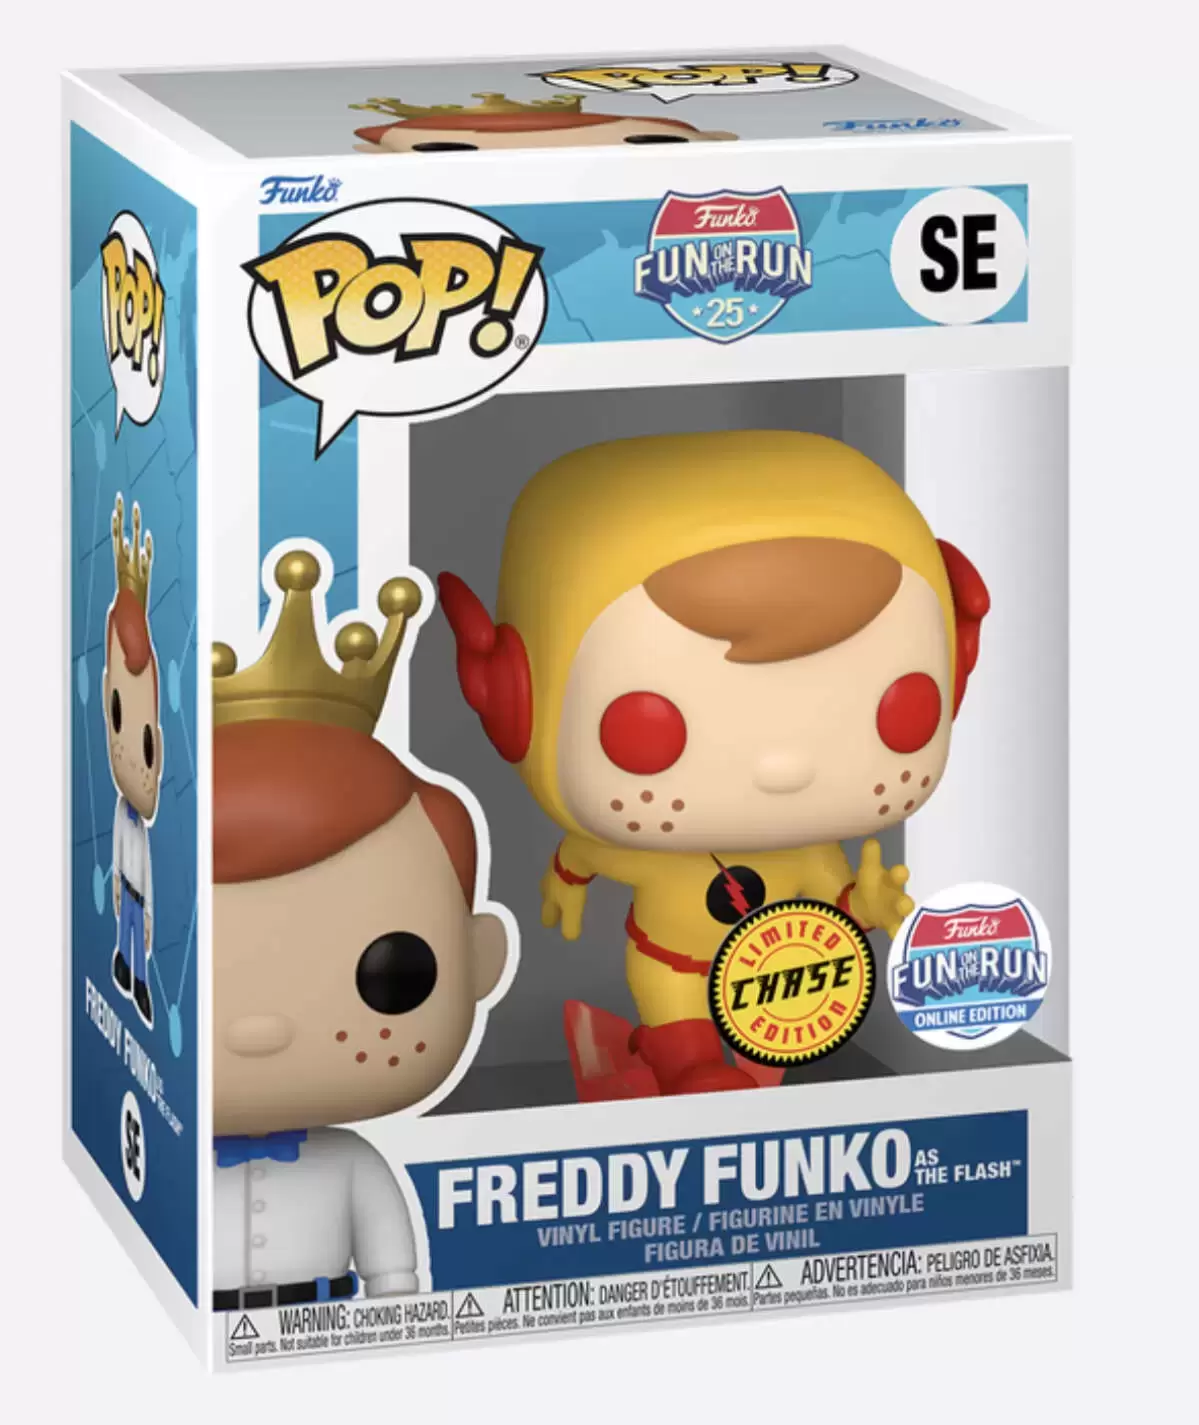 POP! Funko - Freddy Funko as The Flash Chase